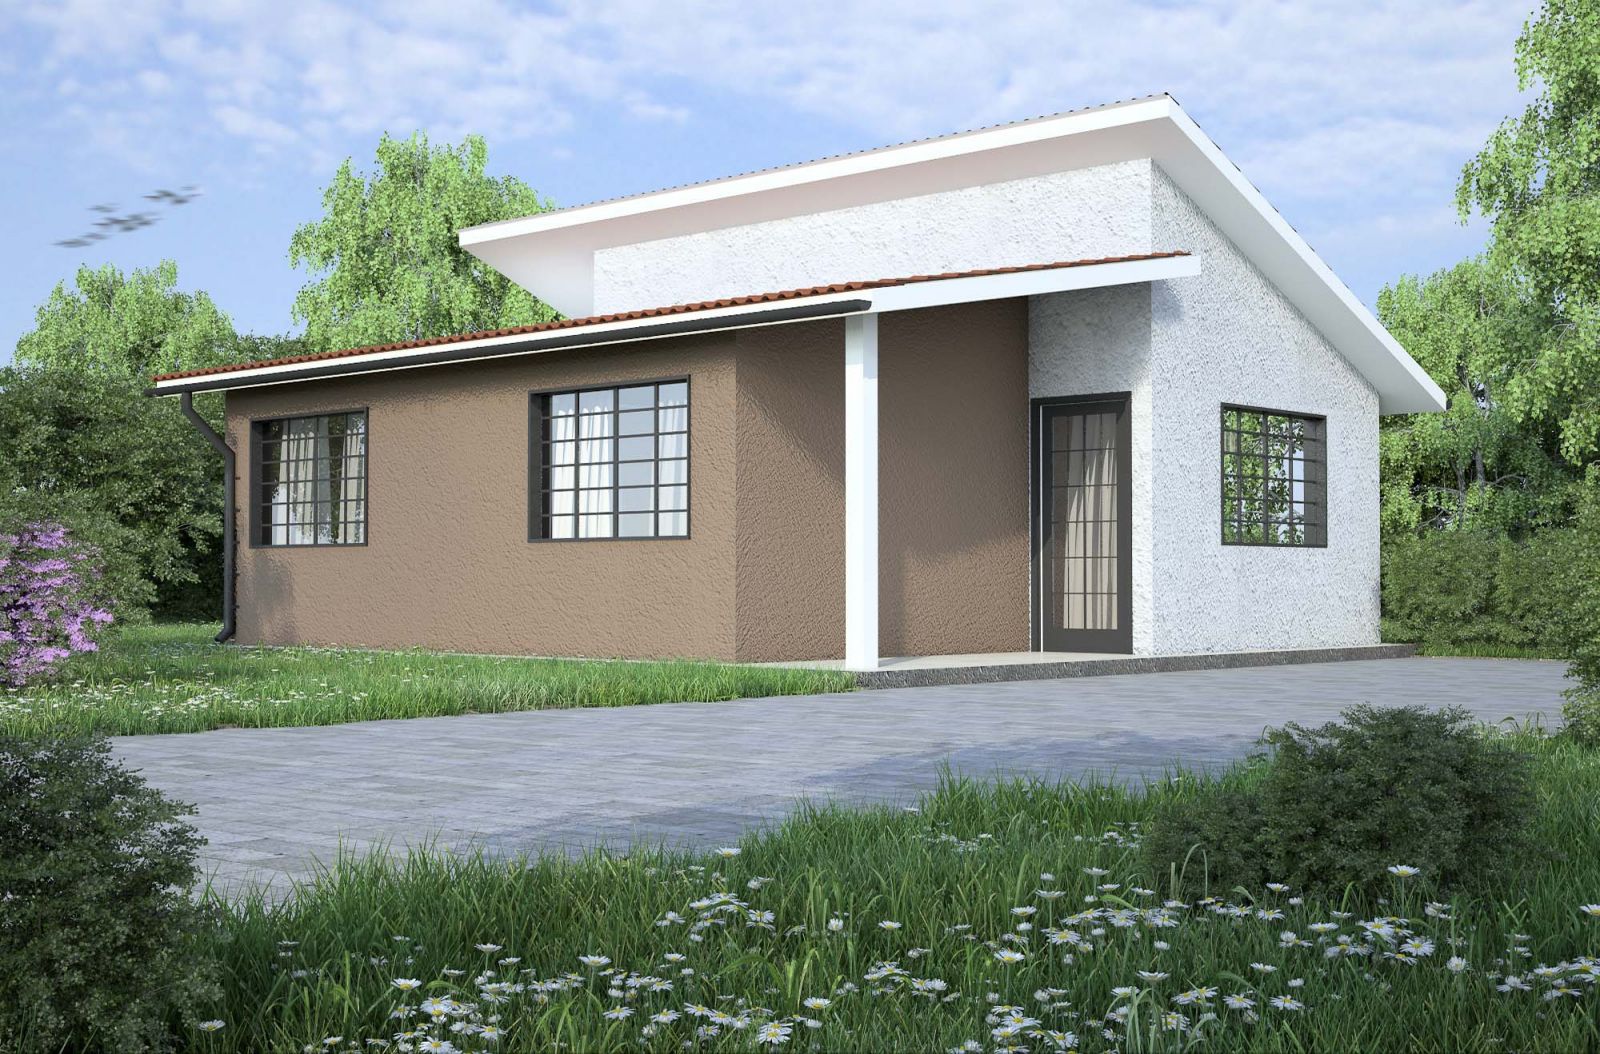 Semi Permanent House Designs In Kenya Zion Star